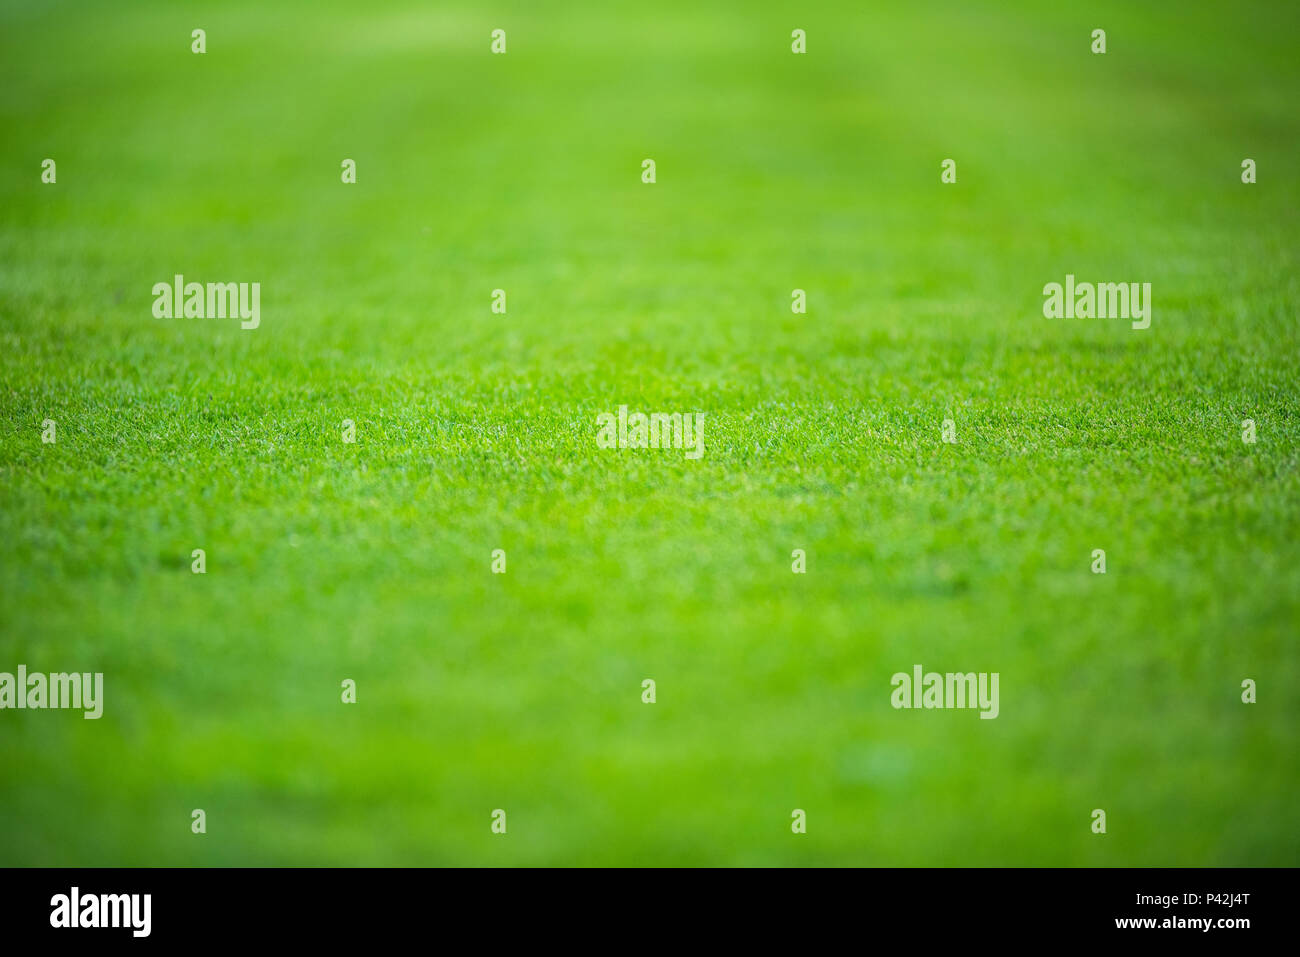 Clean empty football grass field. Green grass seamless texture on soccer pitch Stock Photo